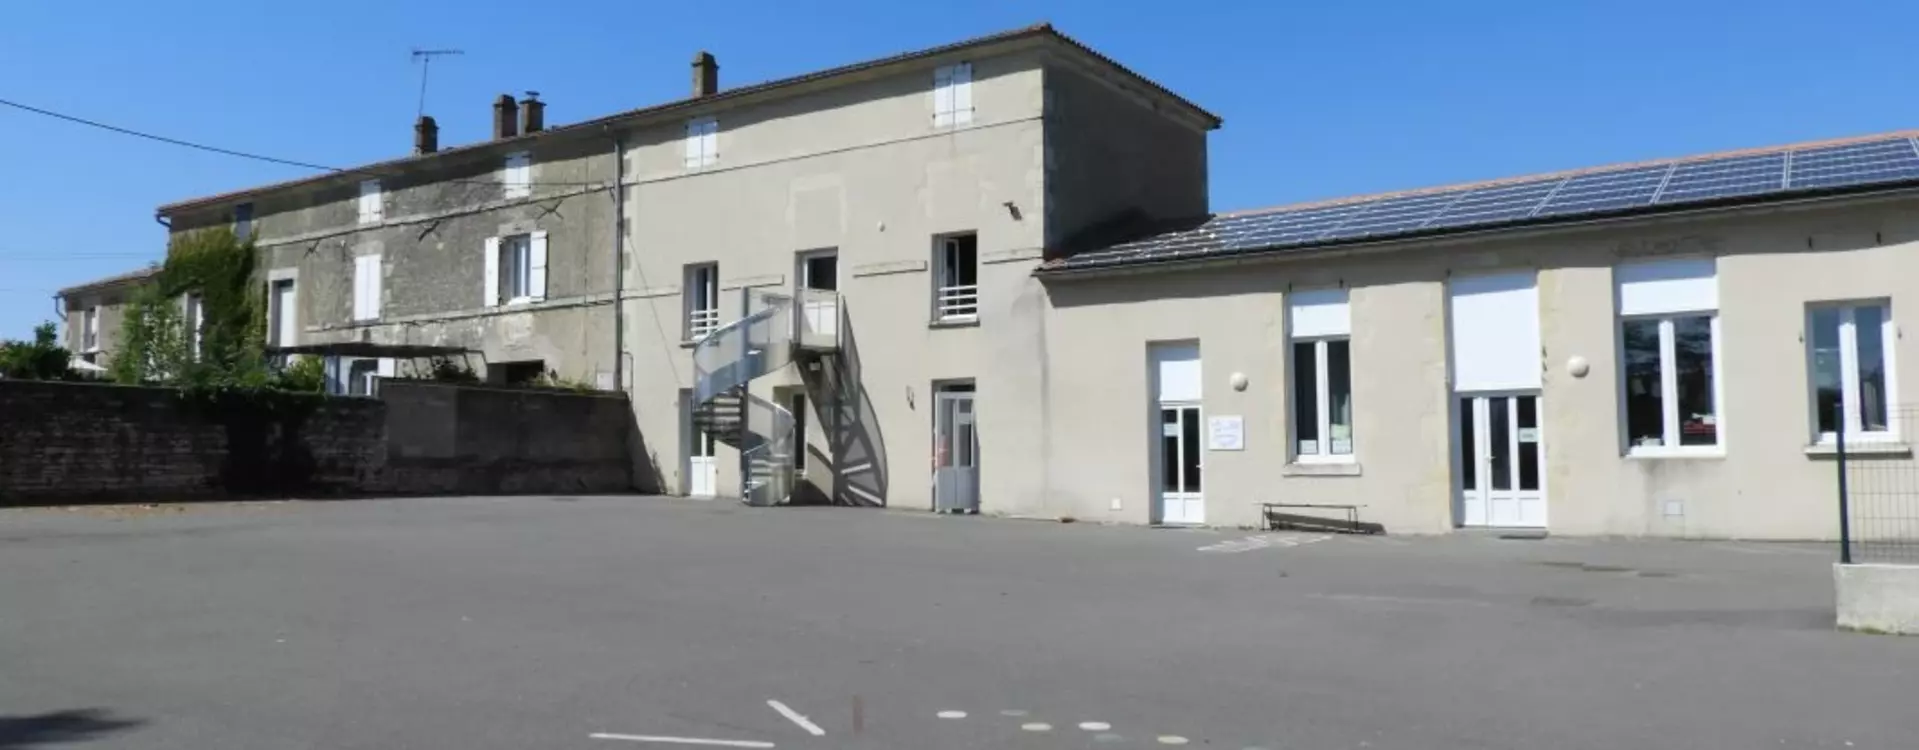 Ecole privée Joseph Bulteau, commune de Vix (85) Vendée